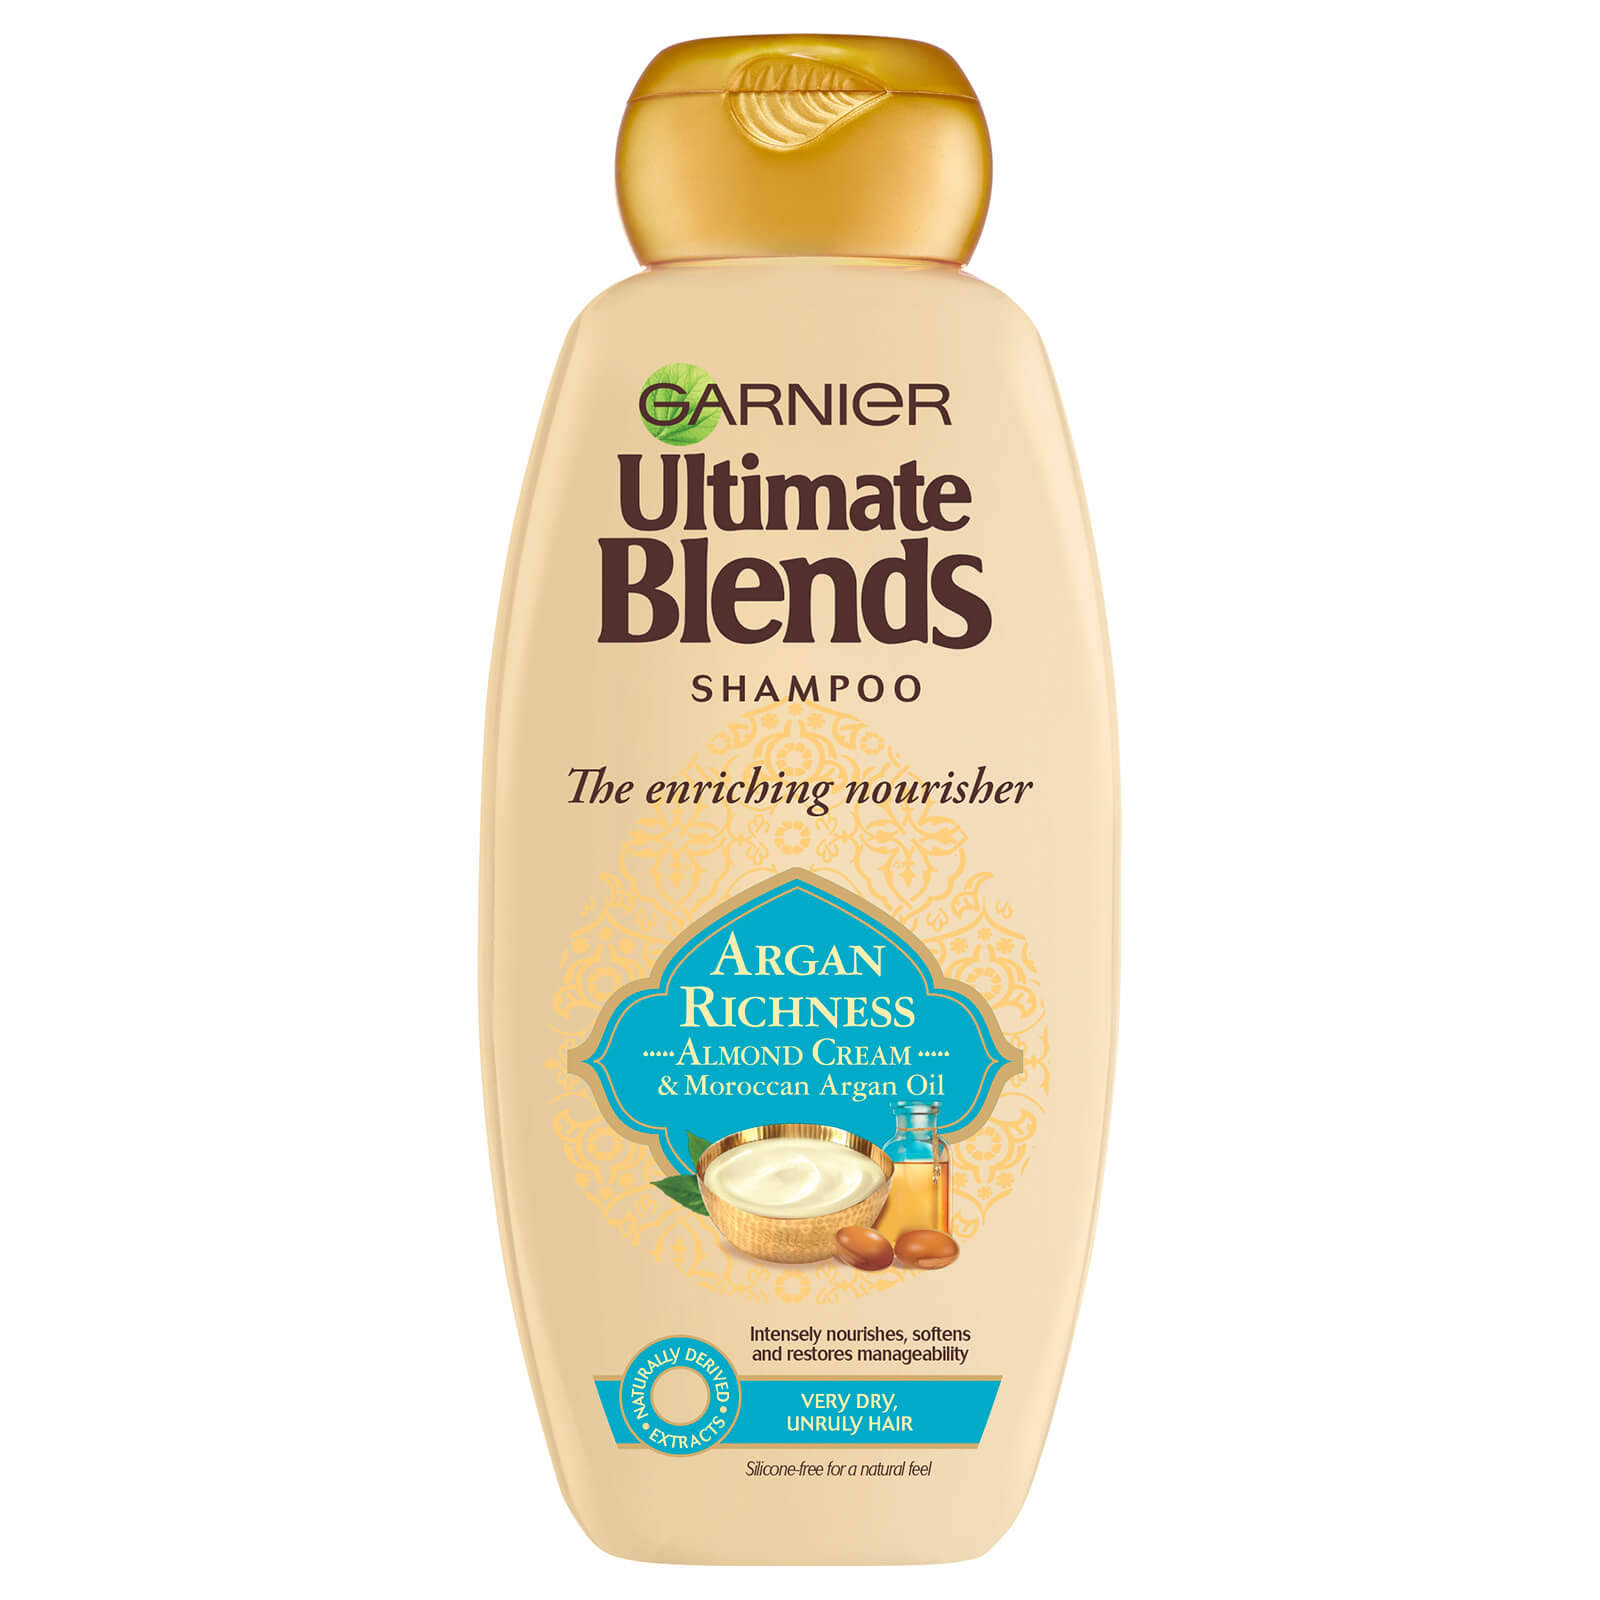 Garnier Ultimate Blends Argan Oil and Almond Cream Dry Hair Shampoo - 360ml